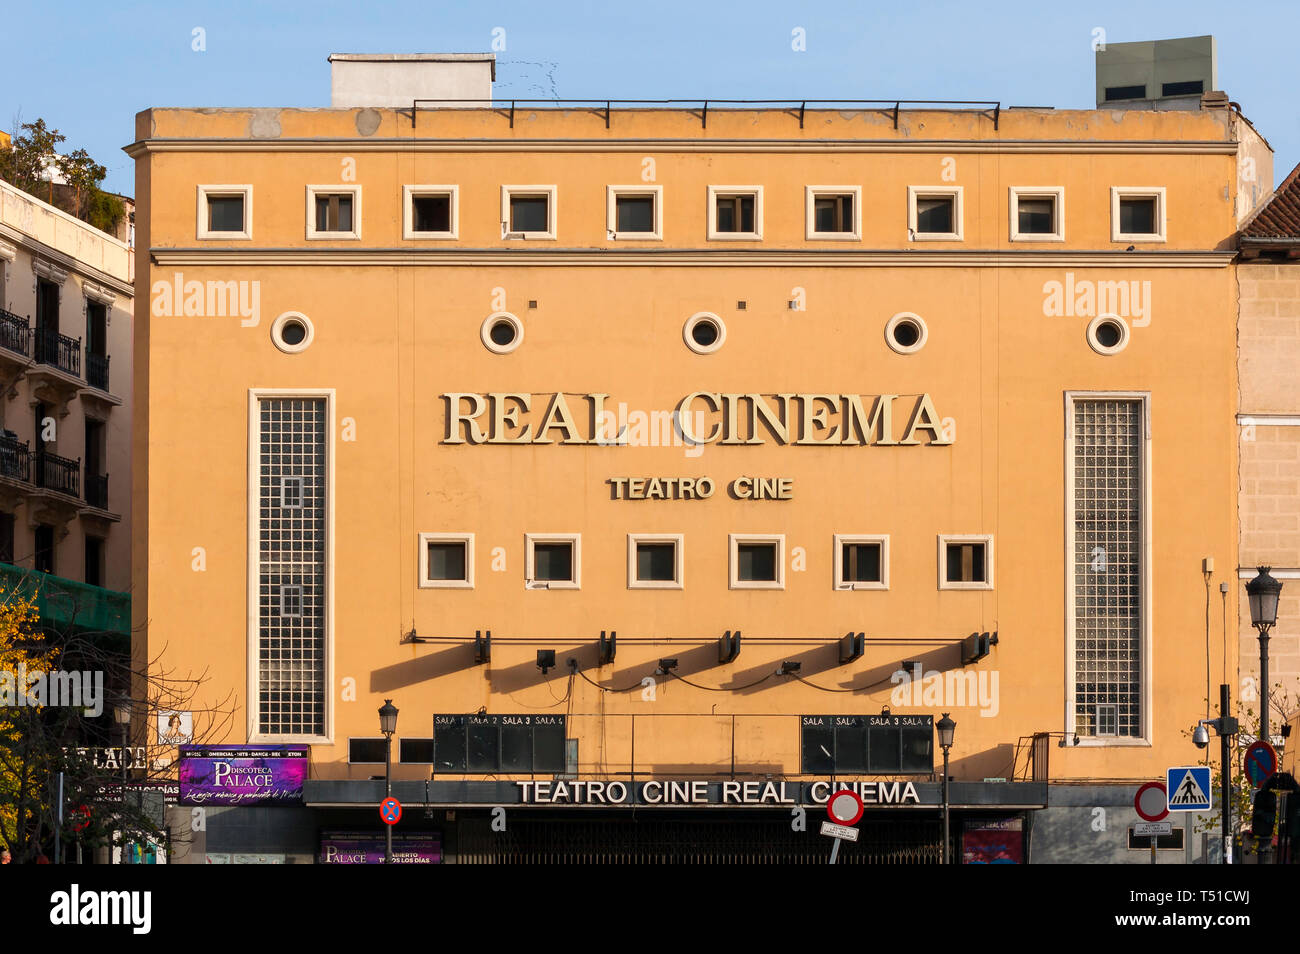 Real Cinema teatro cine. Madrid. España Stock Photo